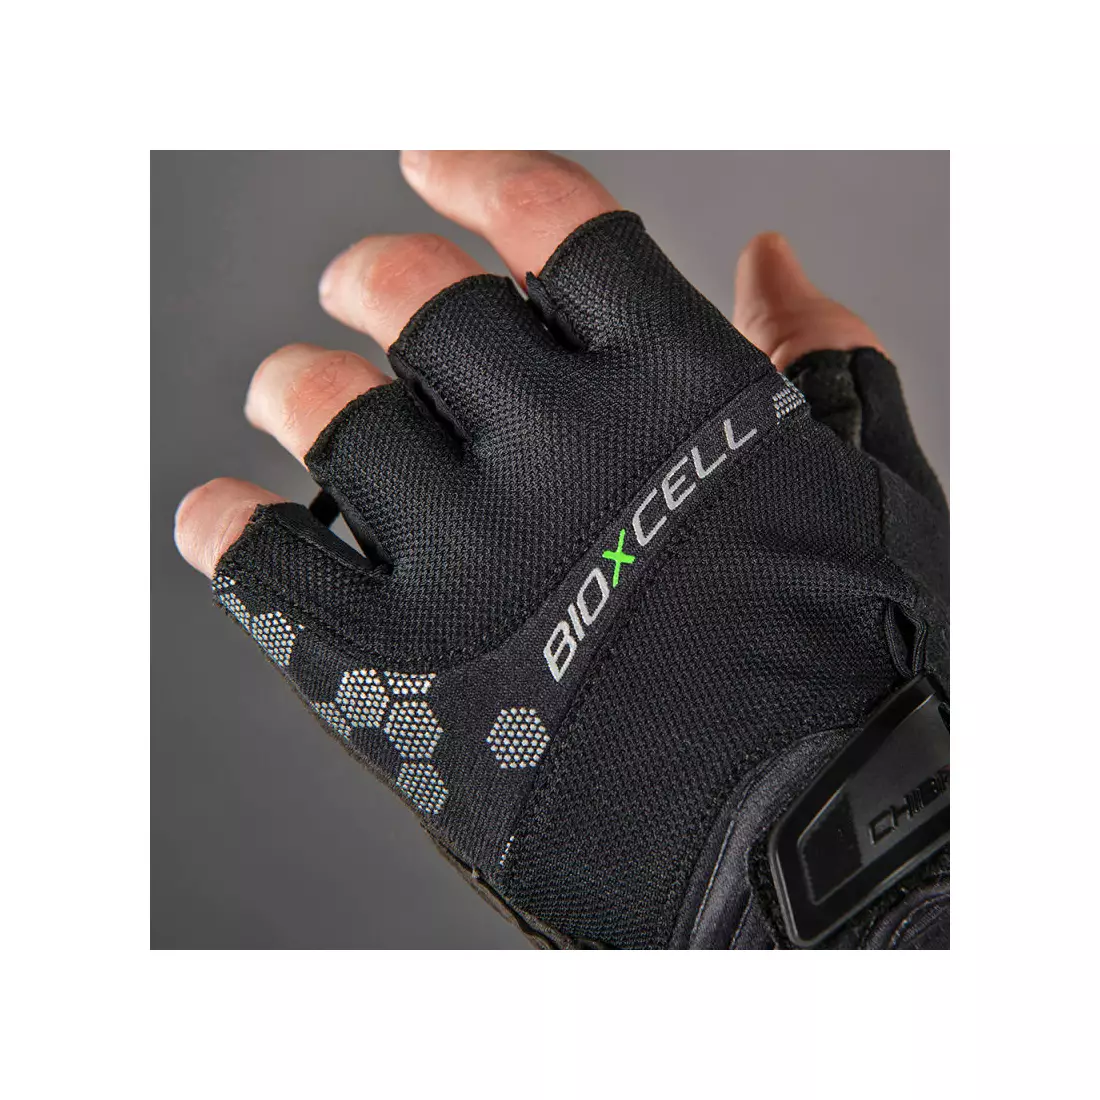 CHIBA BIOXCELL PRO cycling gloves black 3060219